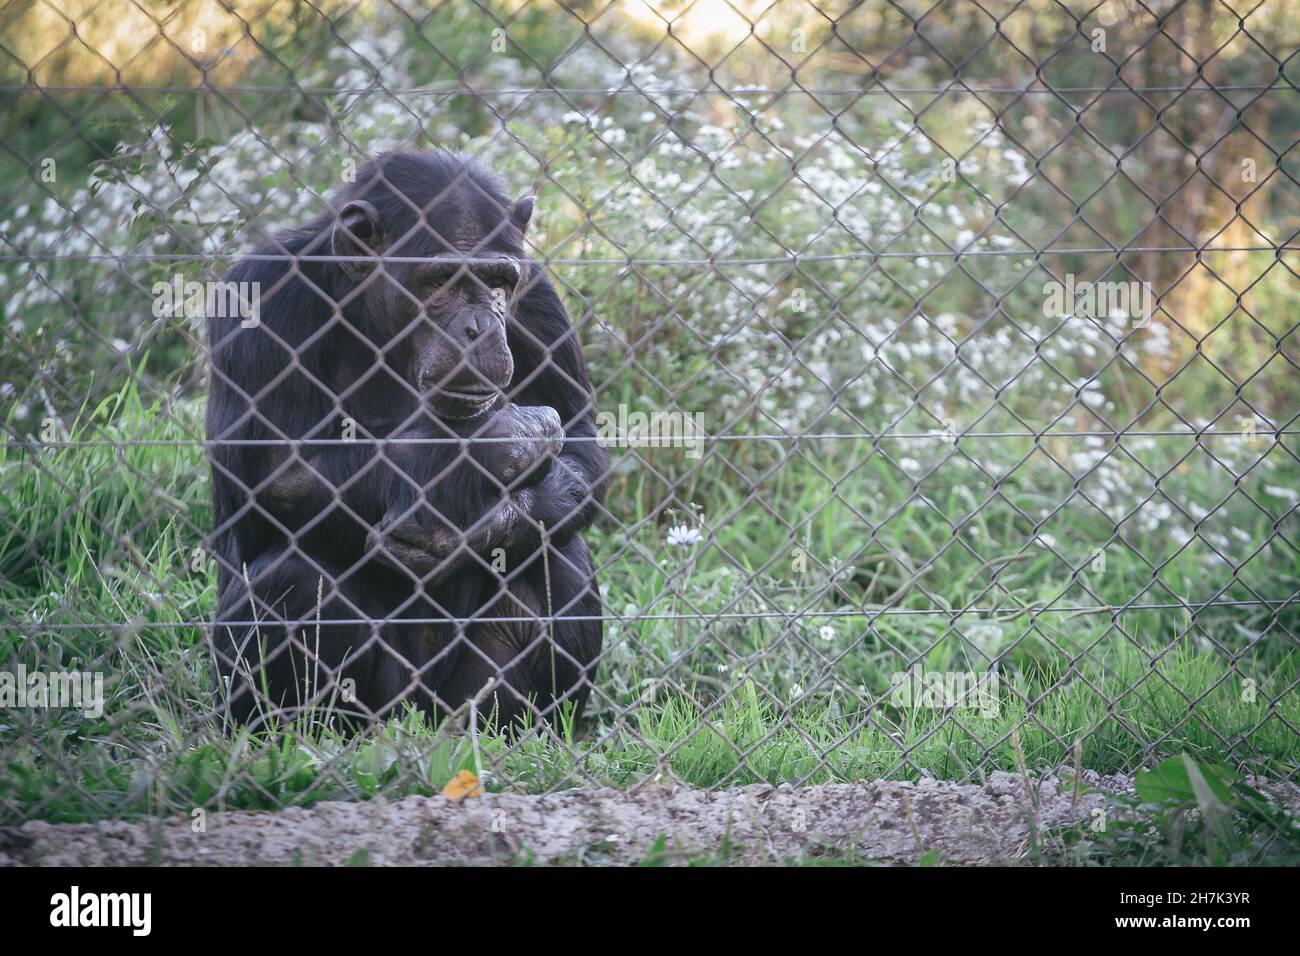 Black quiet wild chimpanzee in captivity behind a metal fence Stock Photo